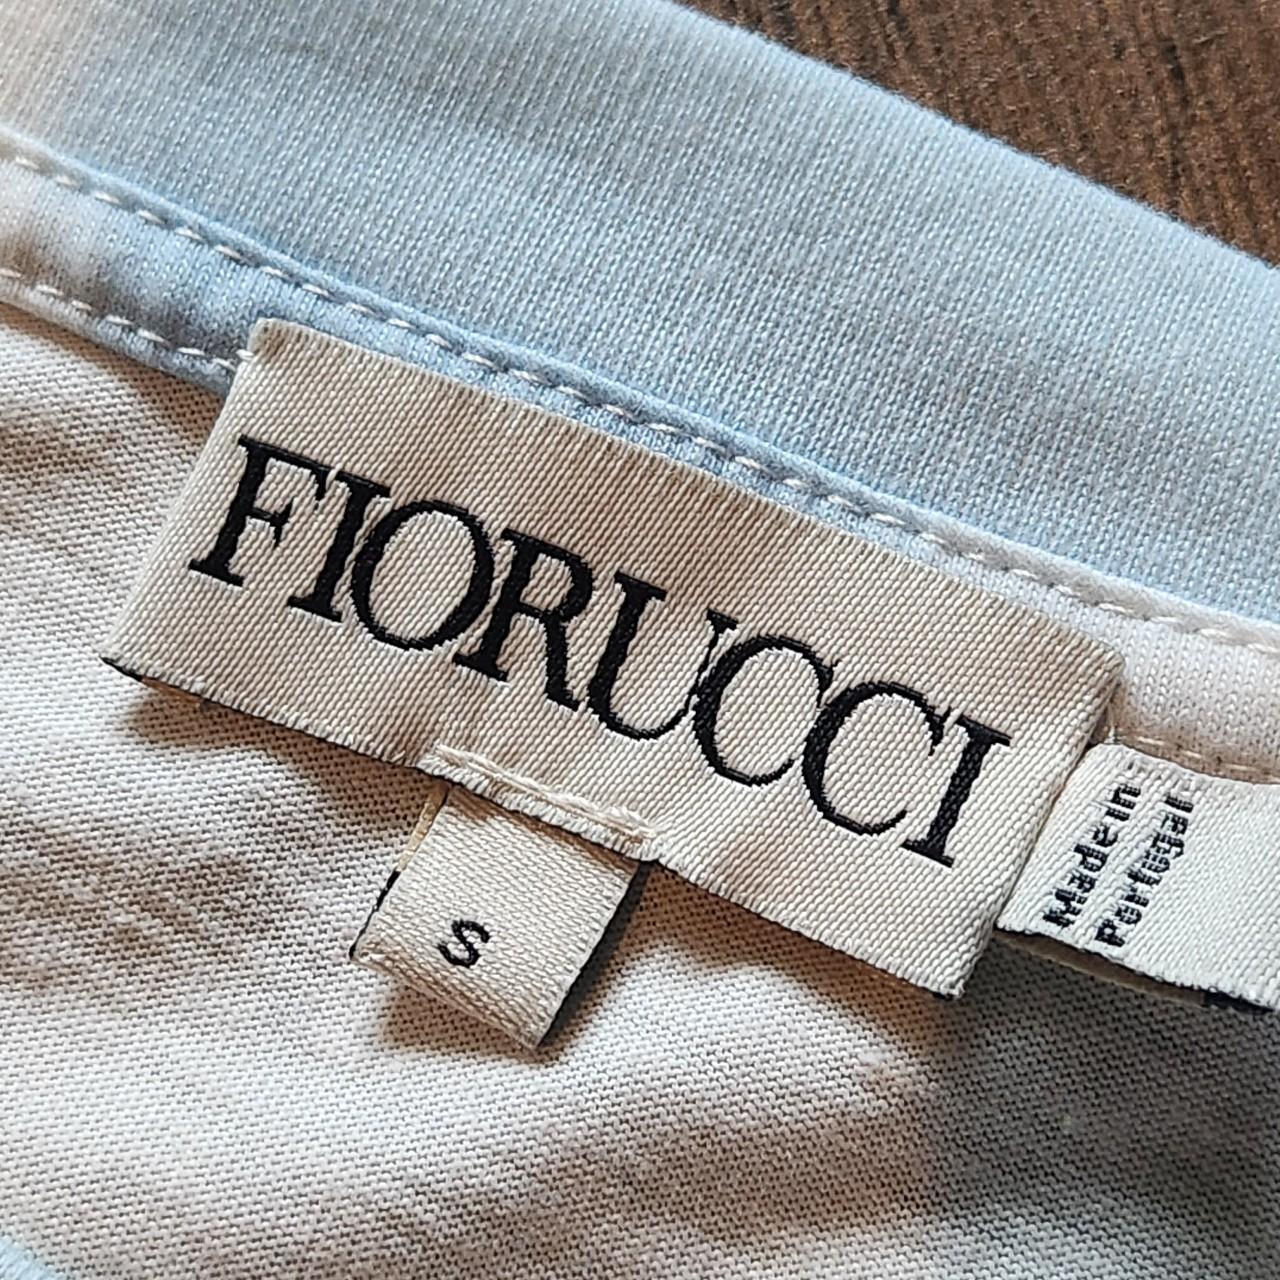 Fiorucci Women's White and Blue Shirt (3)